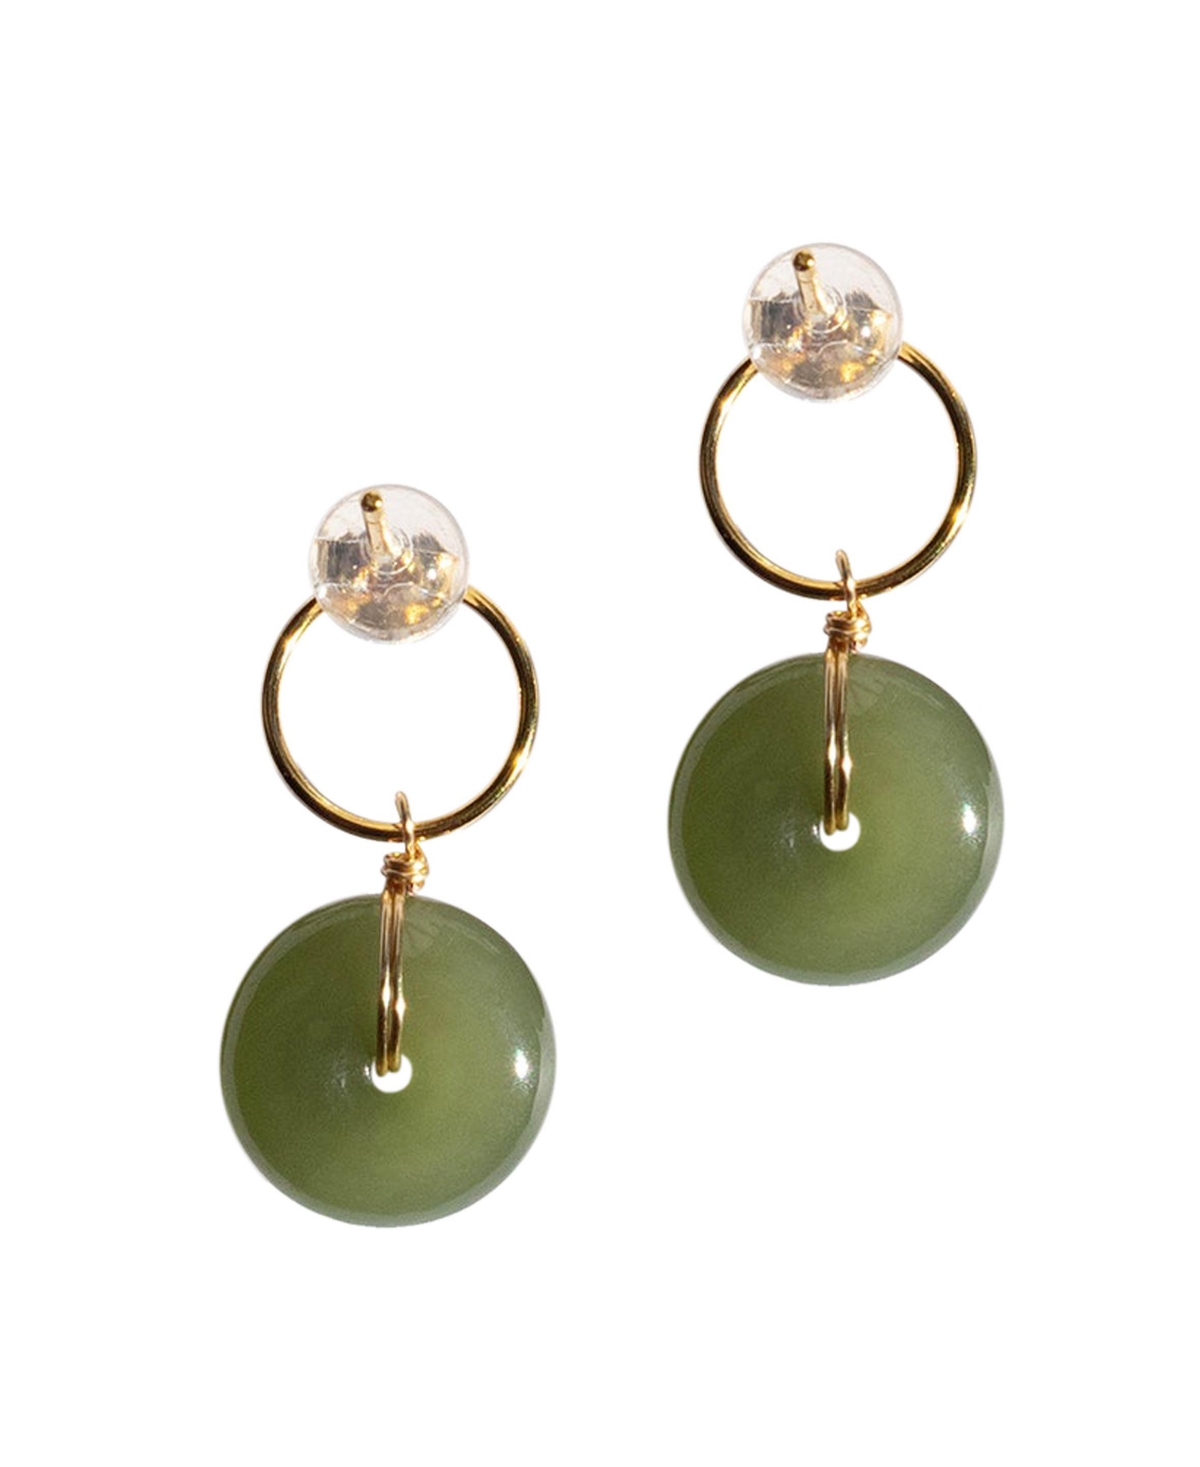 Coin - Green jade hollow earrings - Green